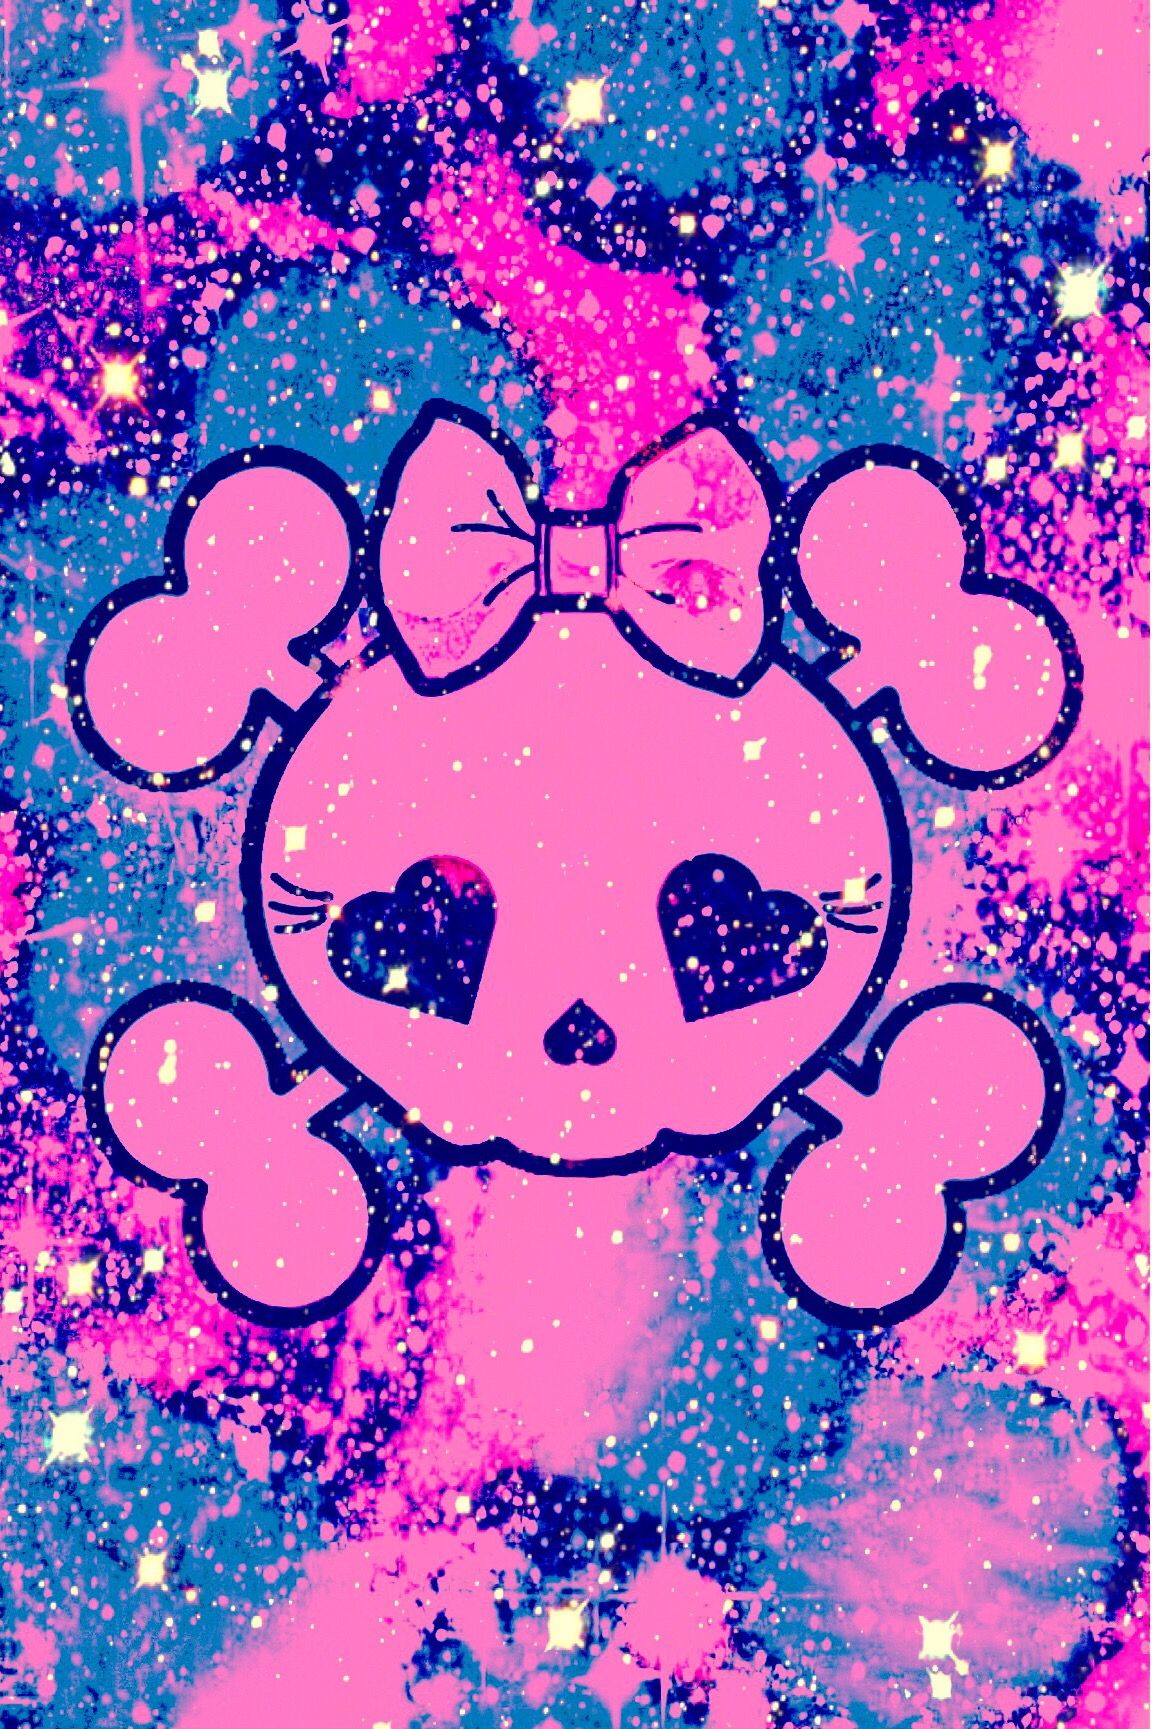 Glitter Sparkle Galaxy Skullwallpaper Pink Punk Grunge